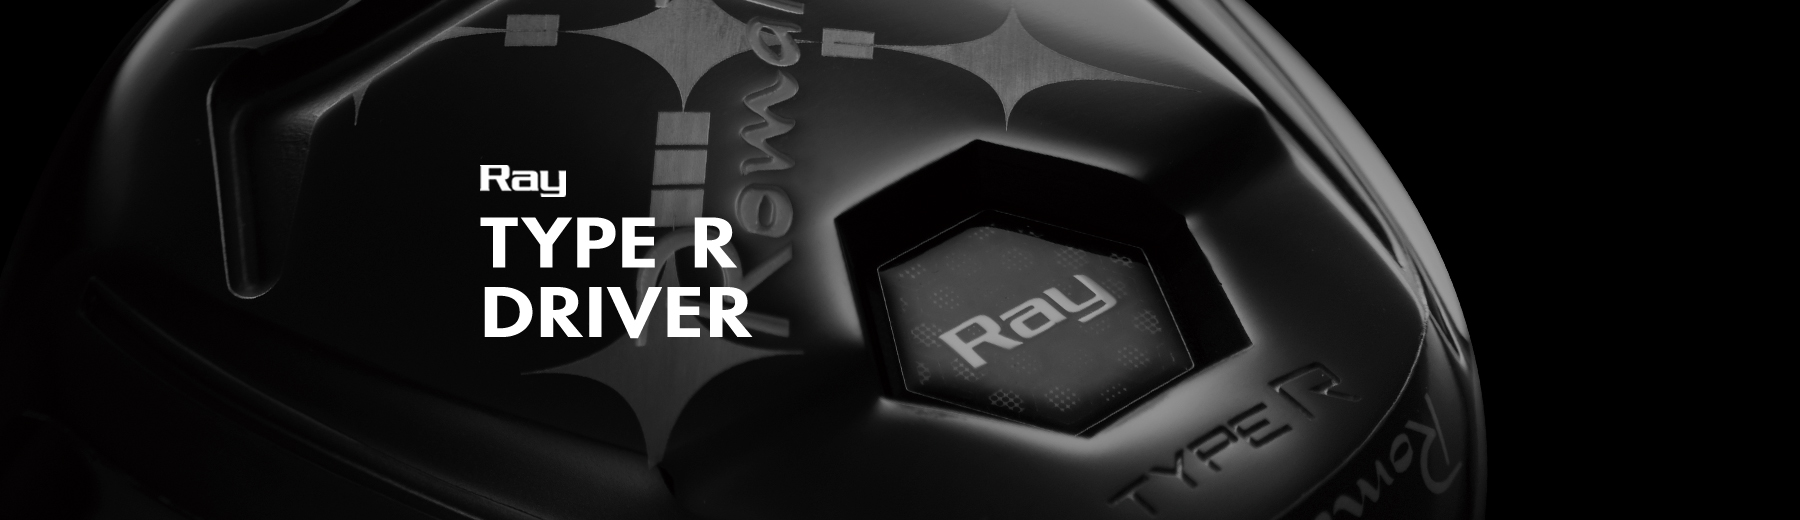 Ray TYPE R DRIVER | ロマロオフィシャルサイト